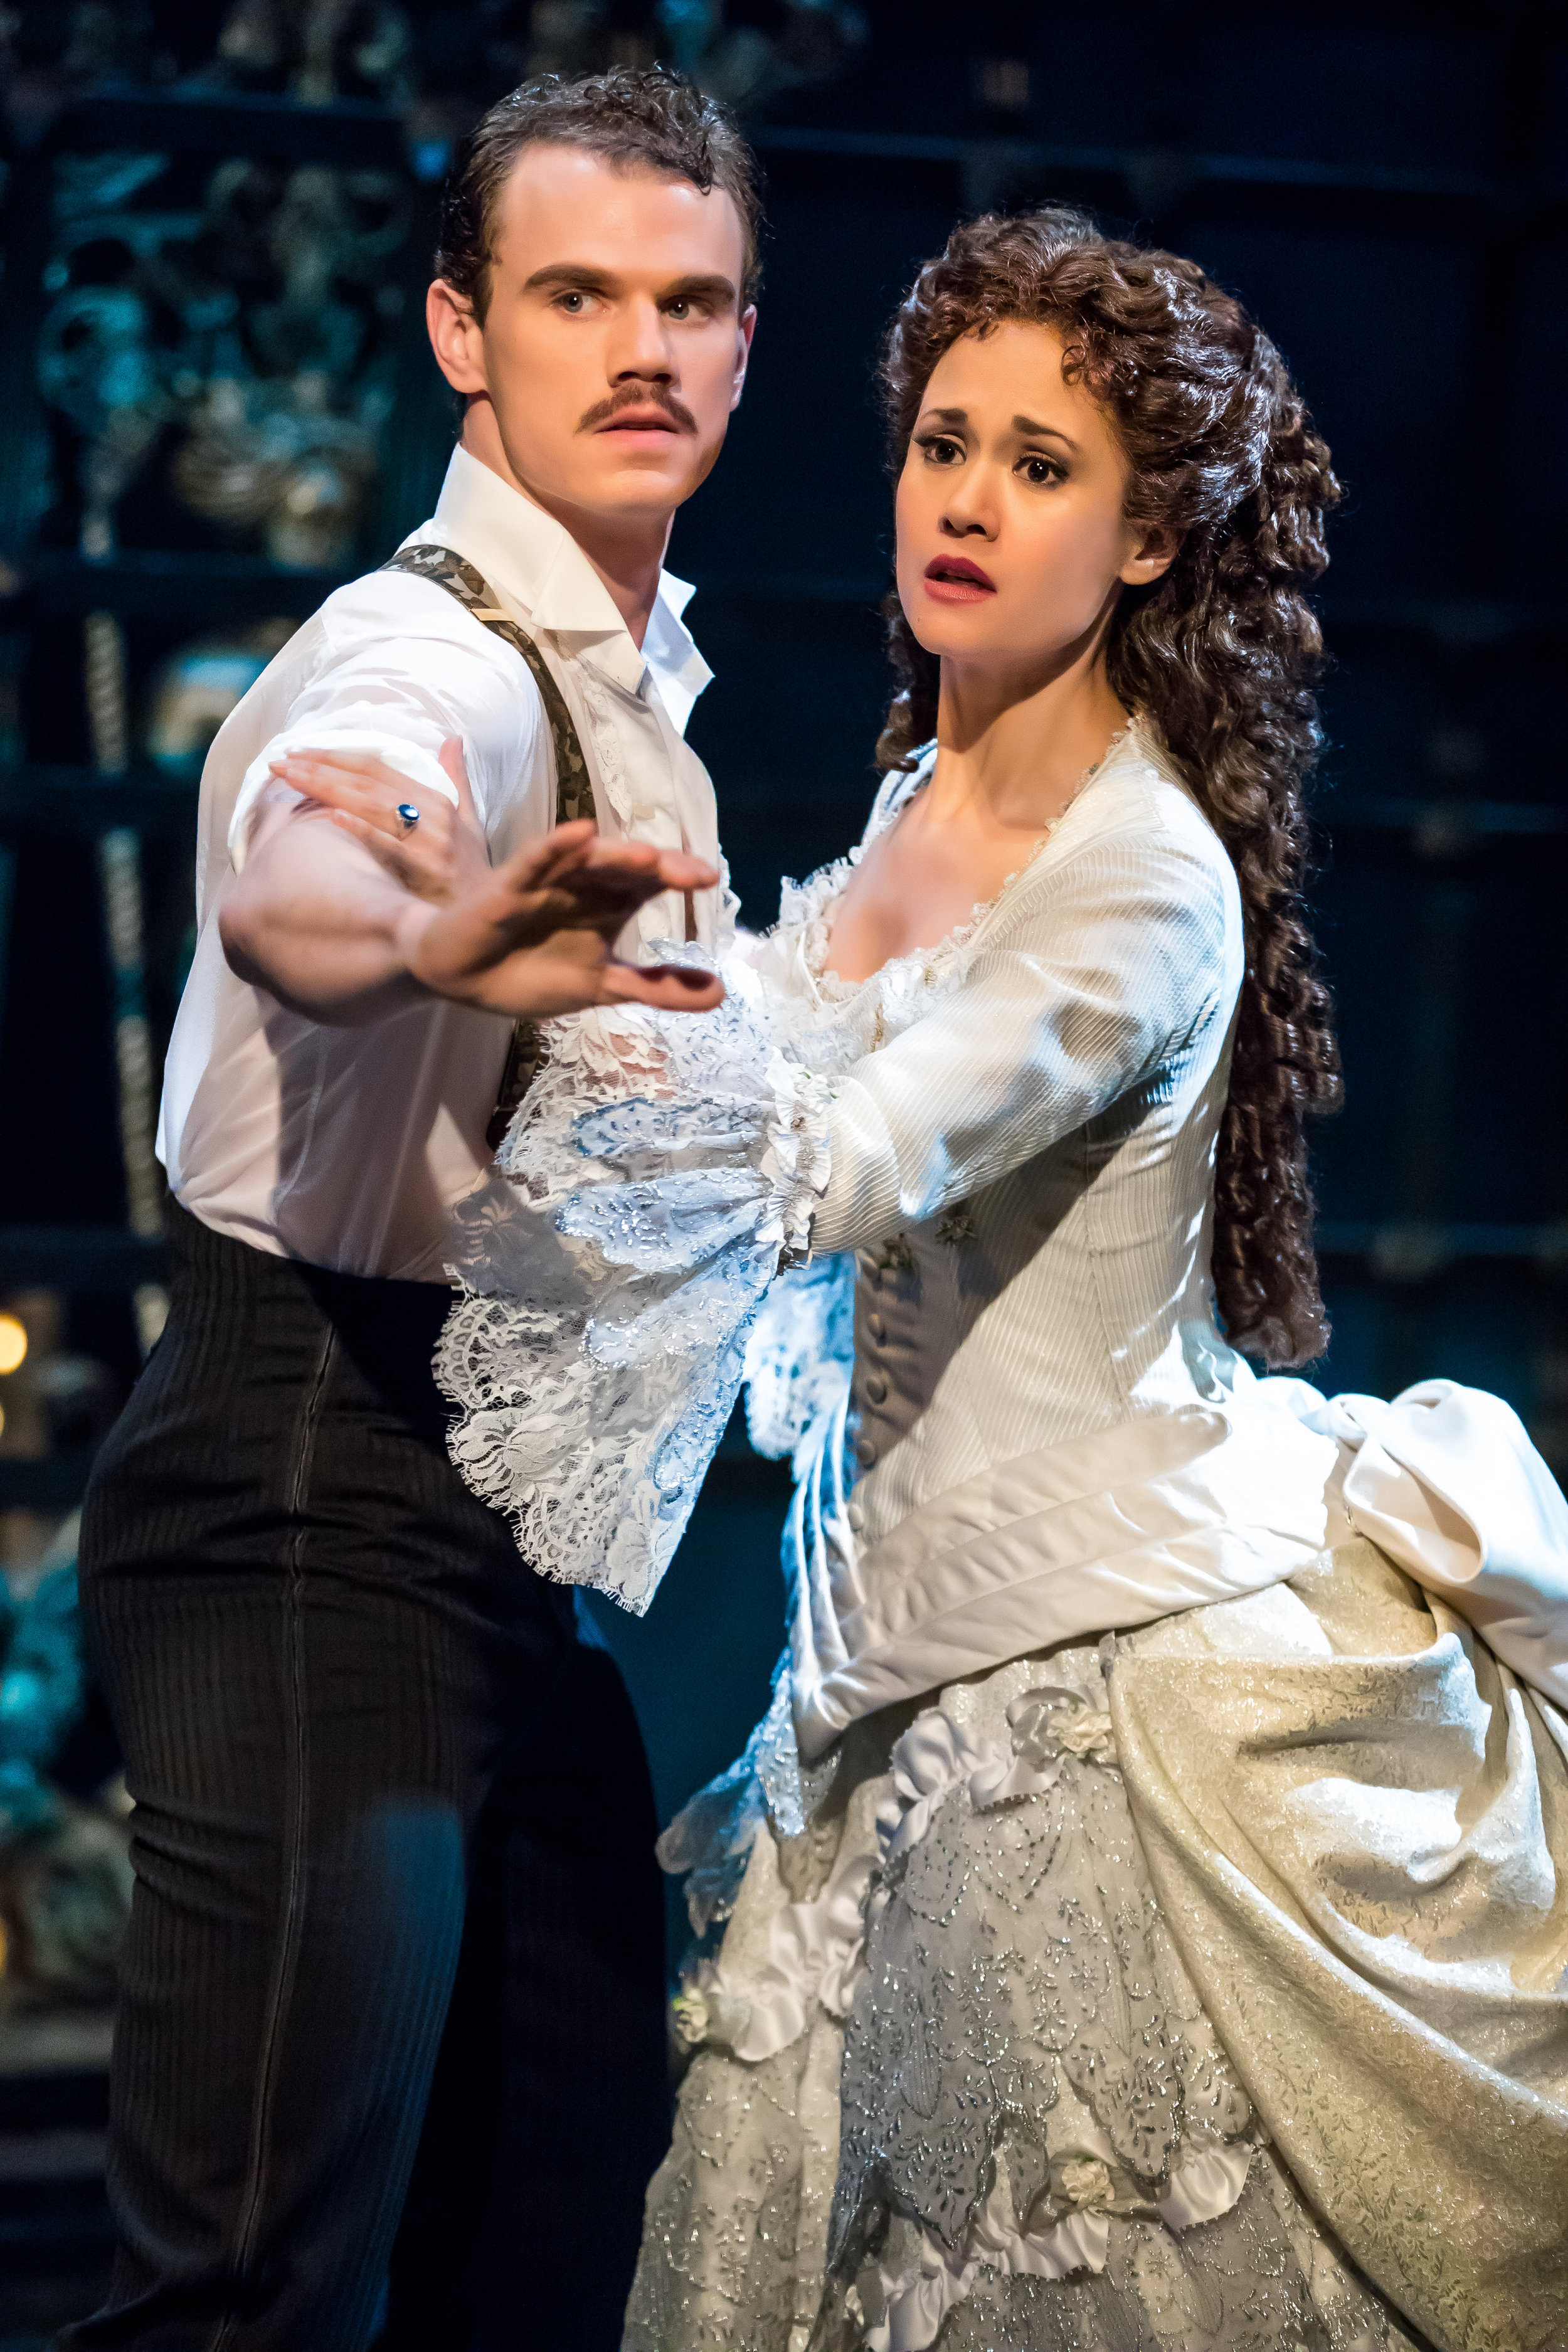   Jay &amp; Ali Ewoldt in The Phantom of the Opera  - Photo by Matthew Murphy 